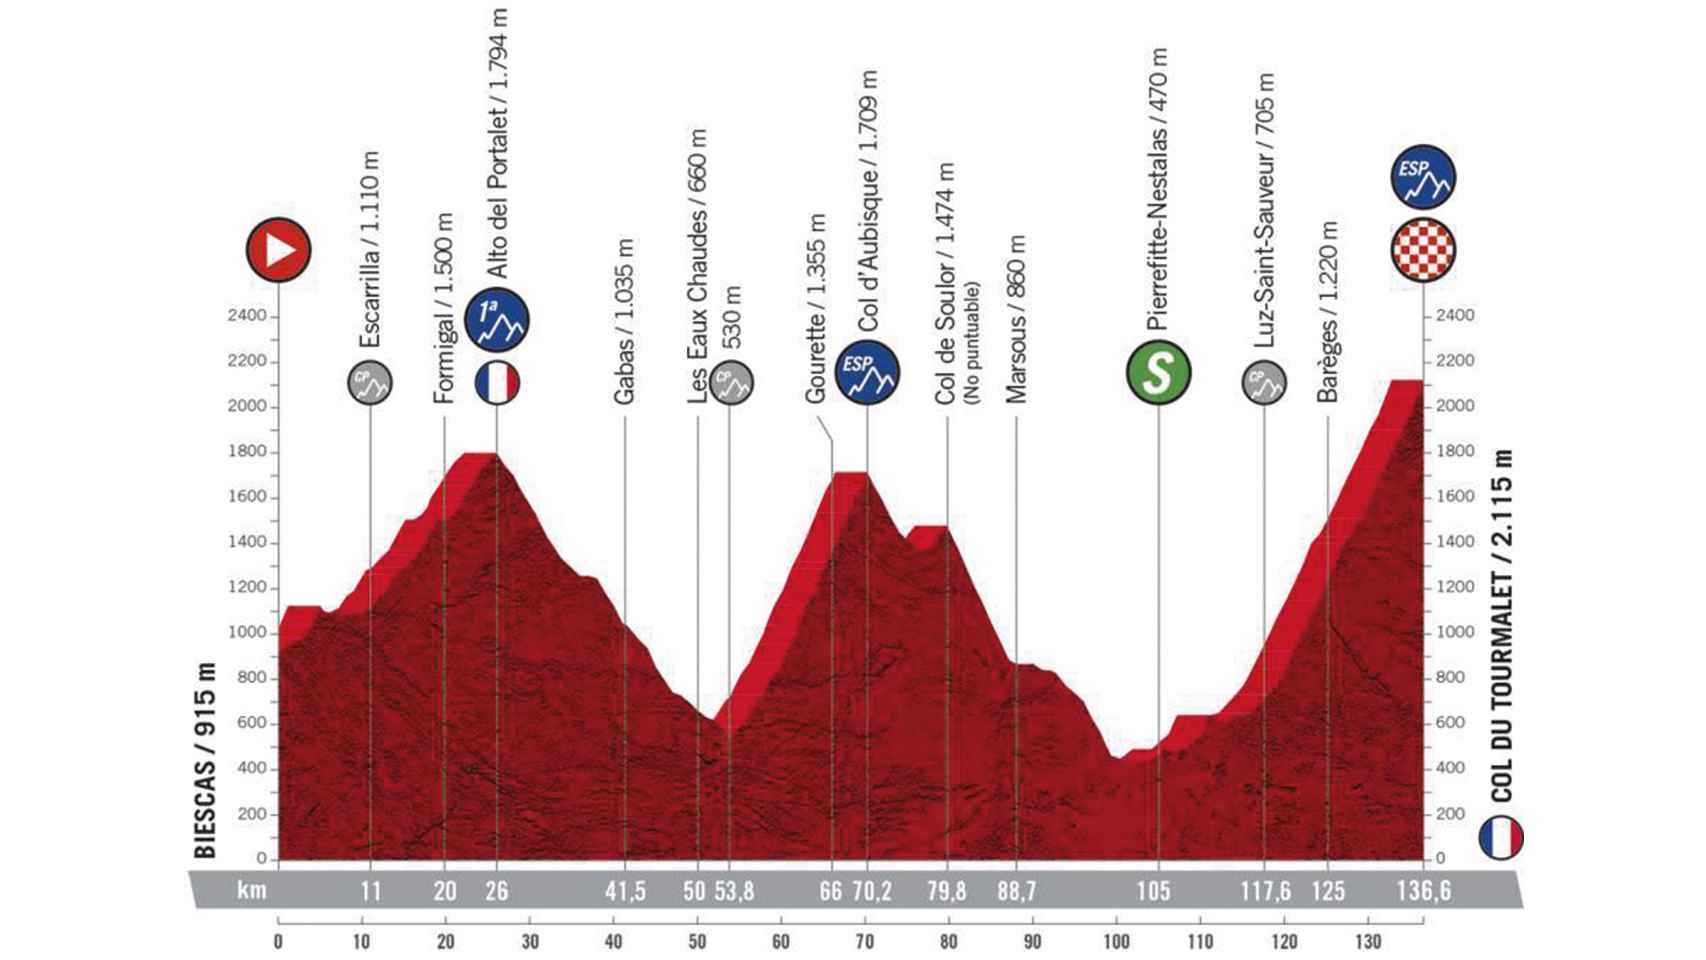 La etapa reina de La Vuelta 2020: Biescas - Col du Tourmalet